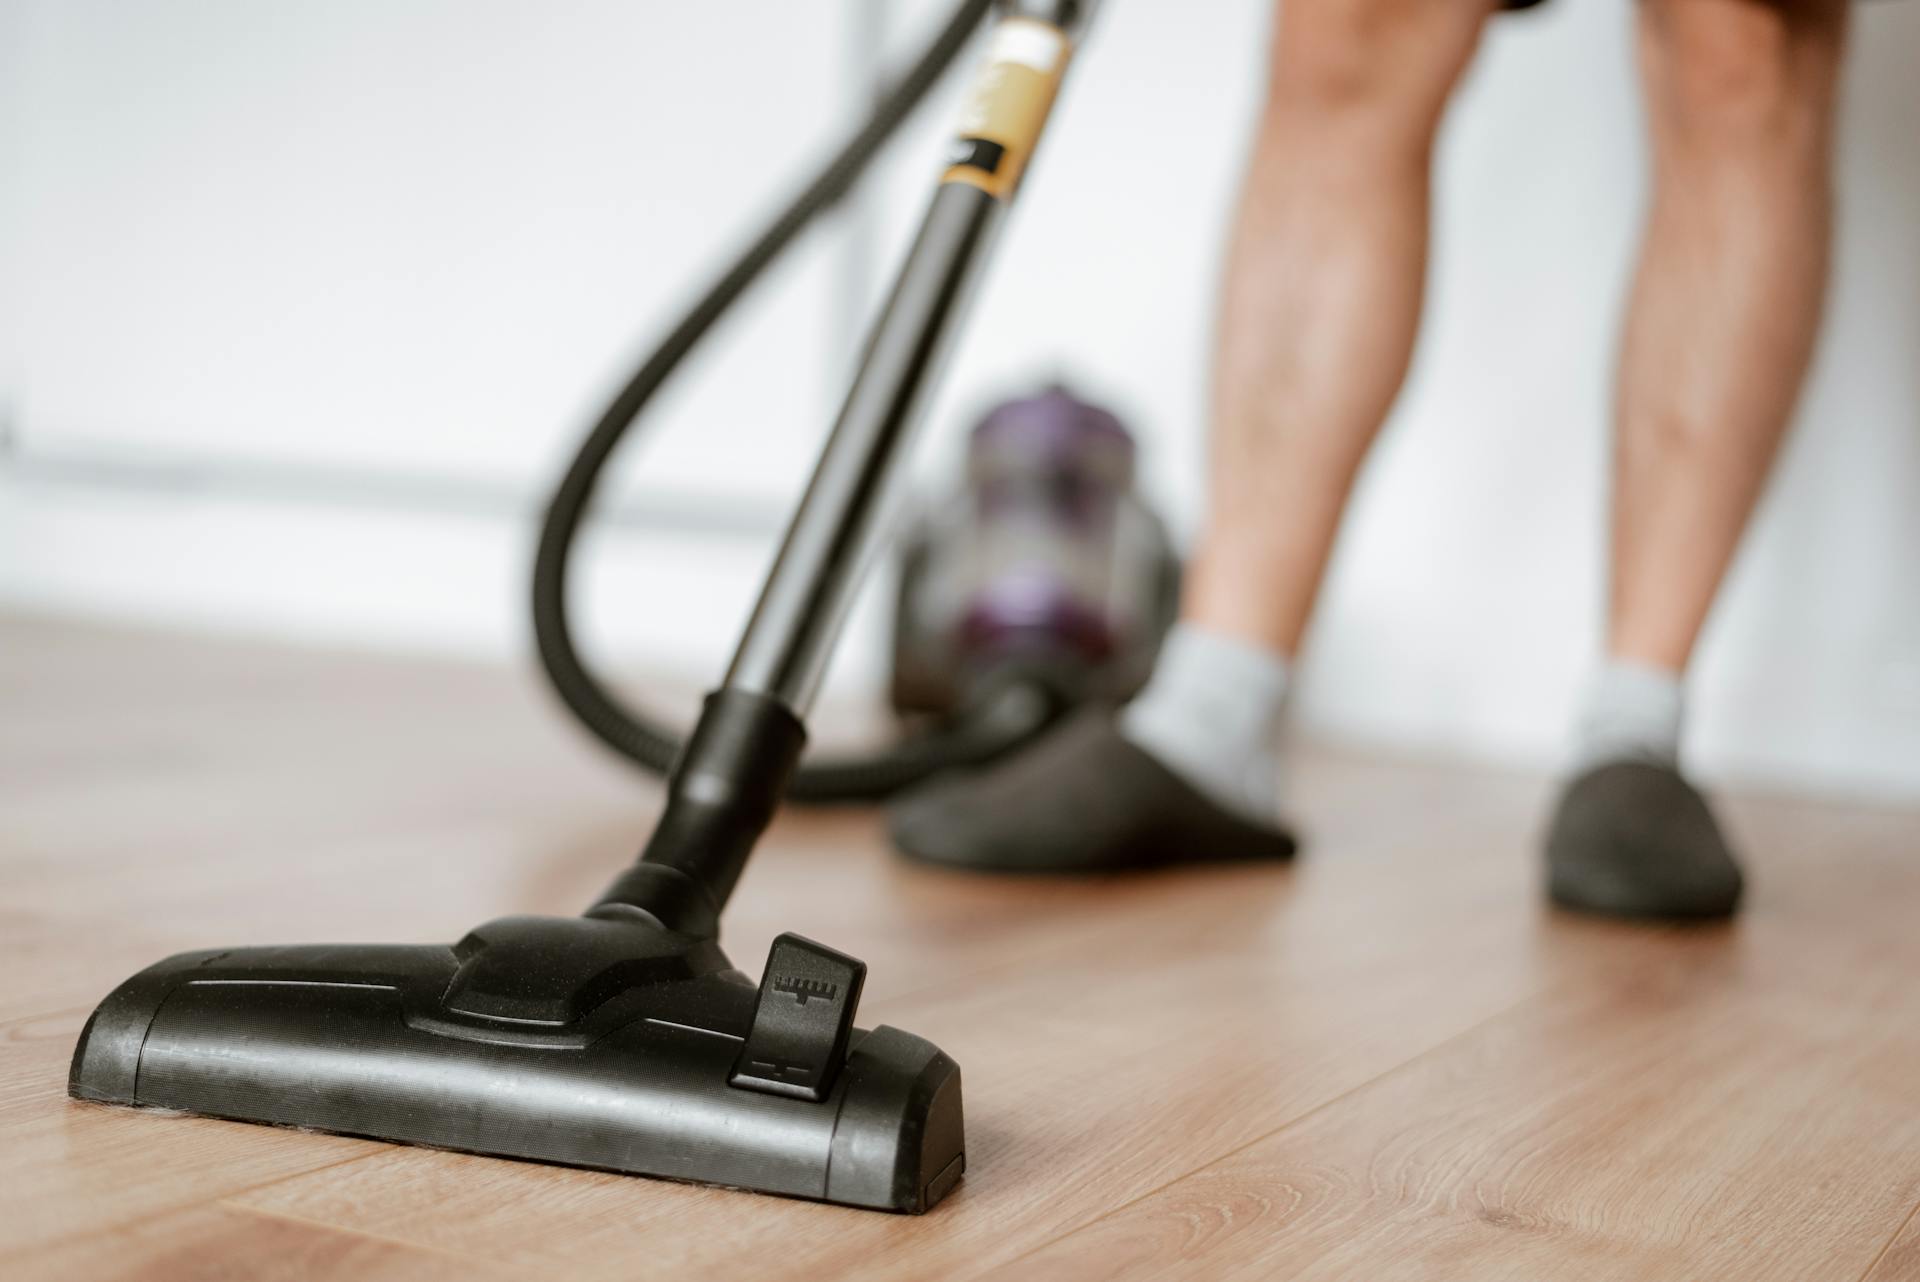 A man vacuum cleaning the floor | Source: Pexels